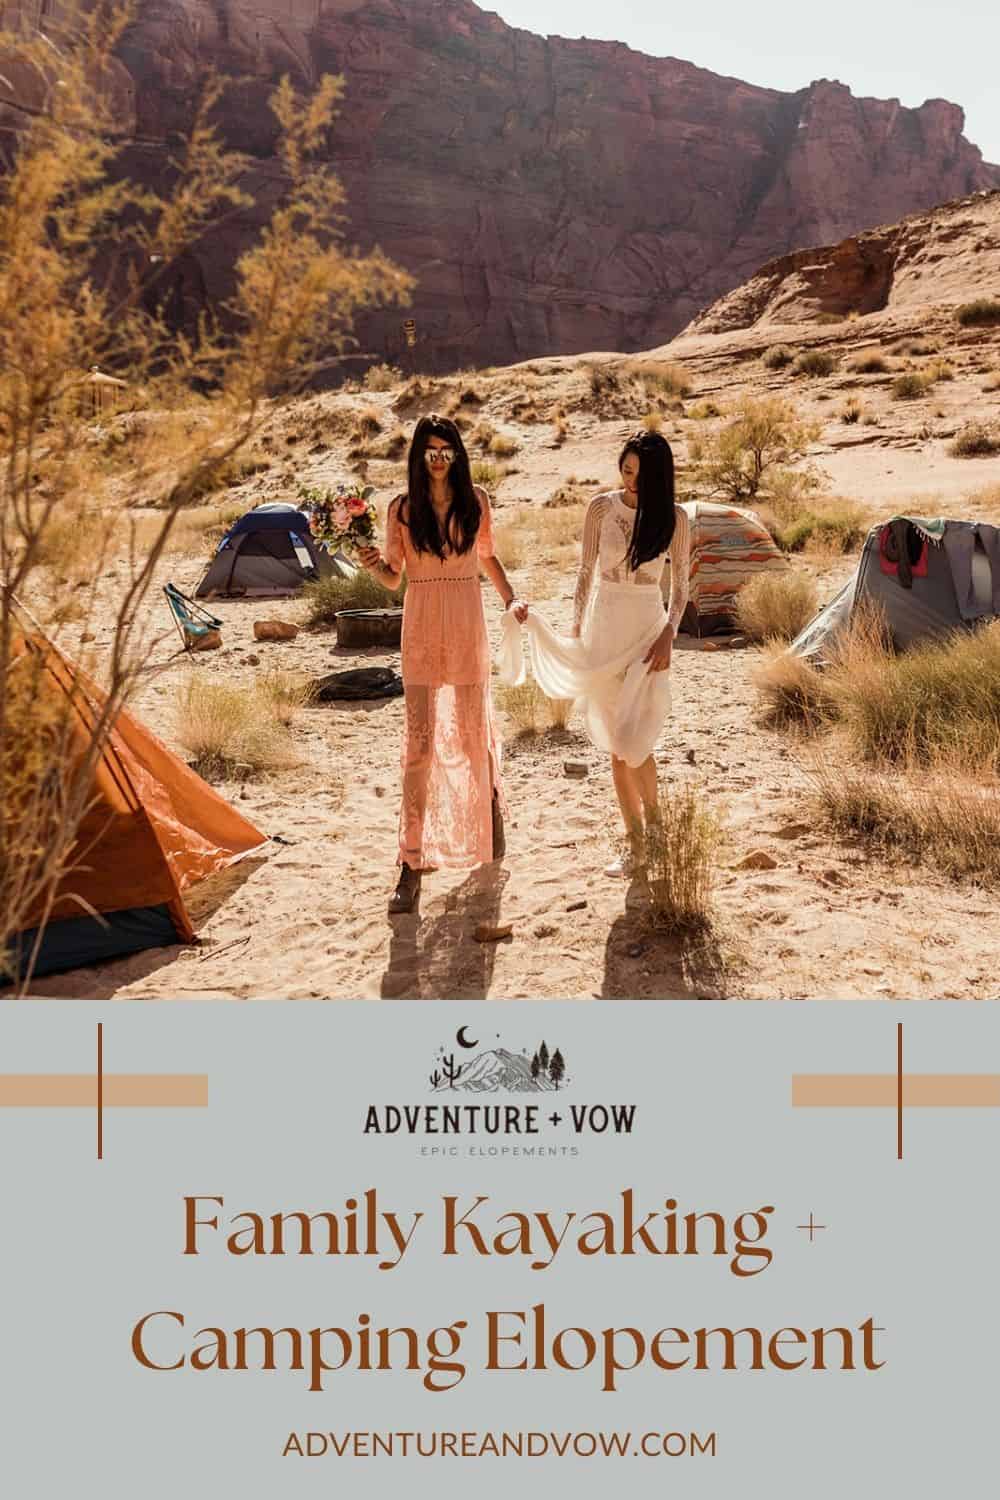 Family elopement kayaking and camping at horseshoe bend. 